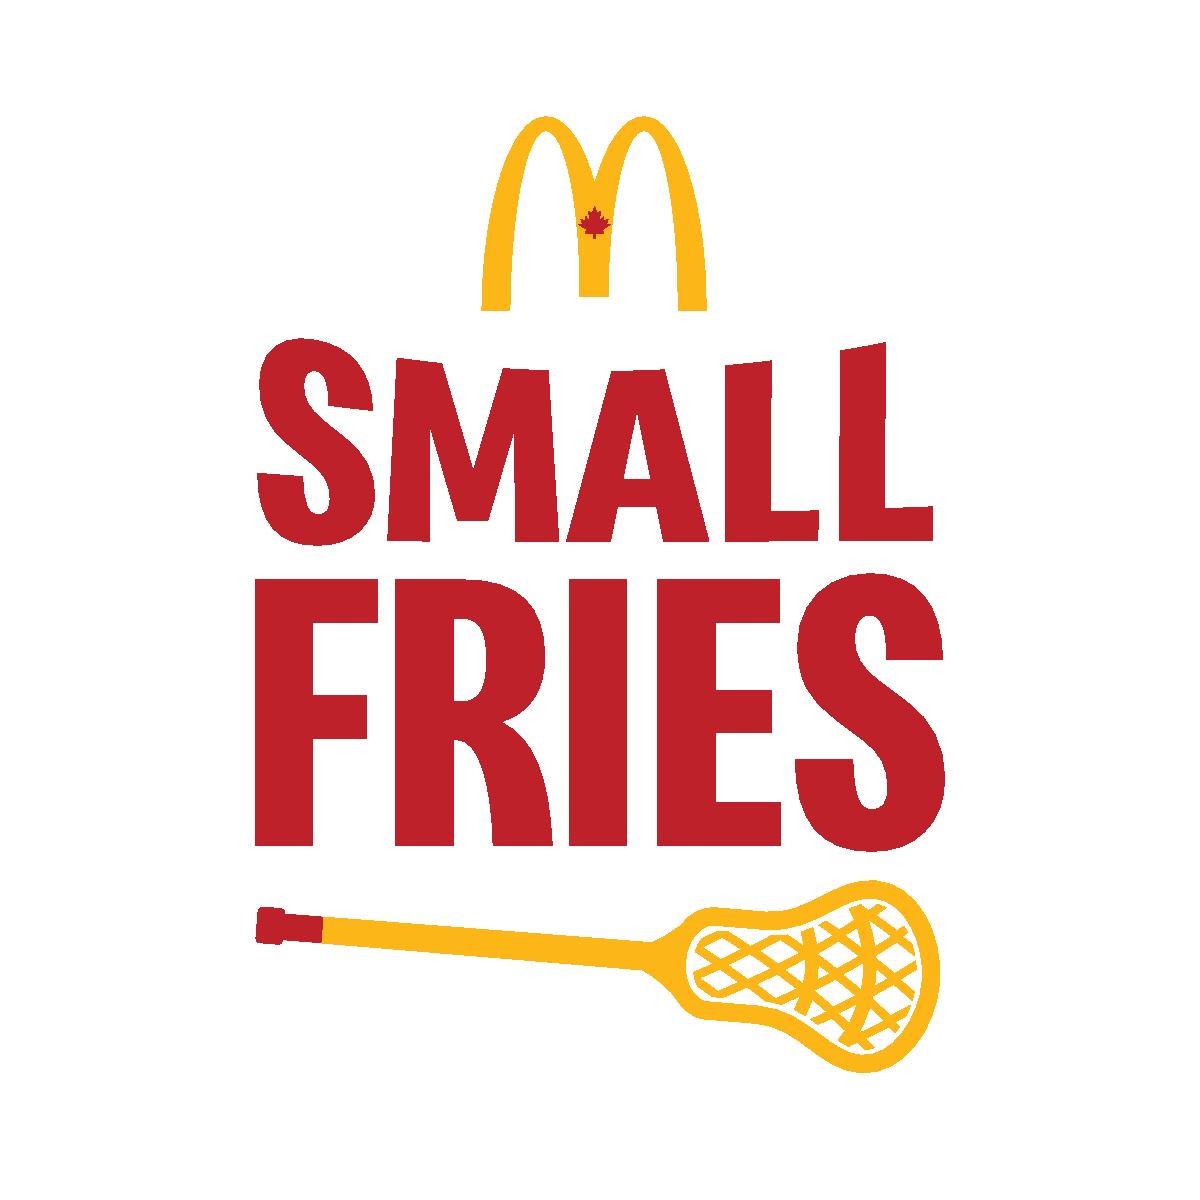 McDonald's Small Fries